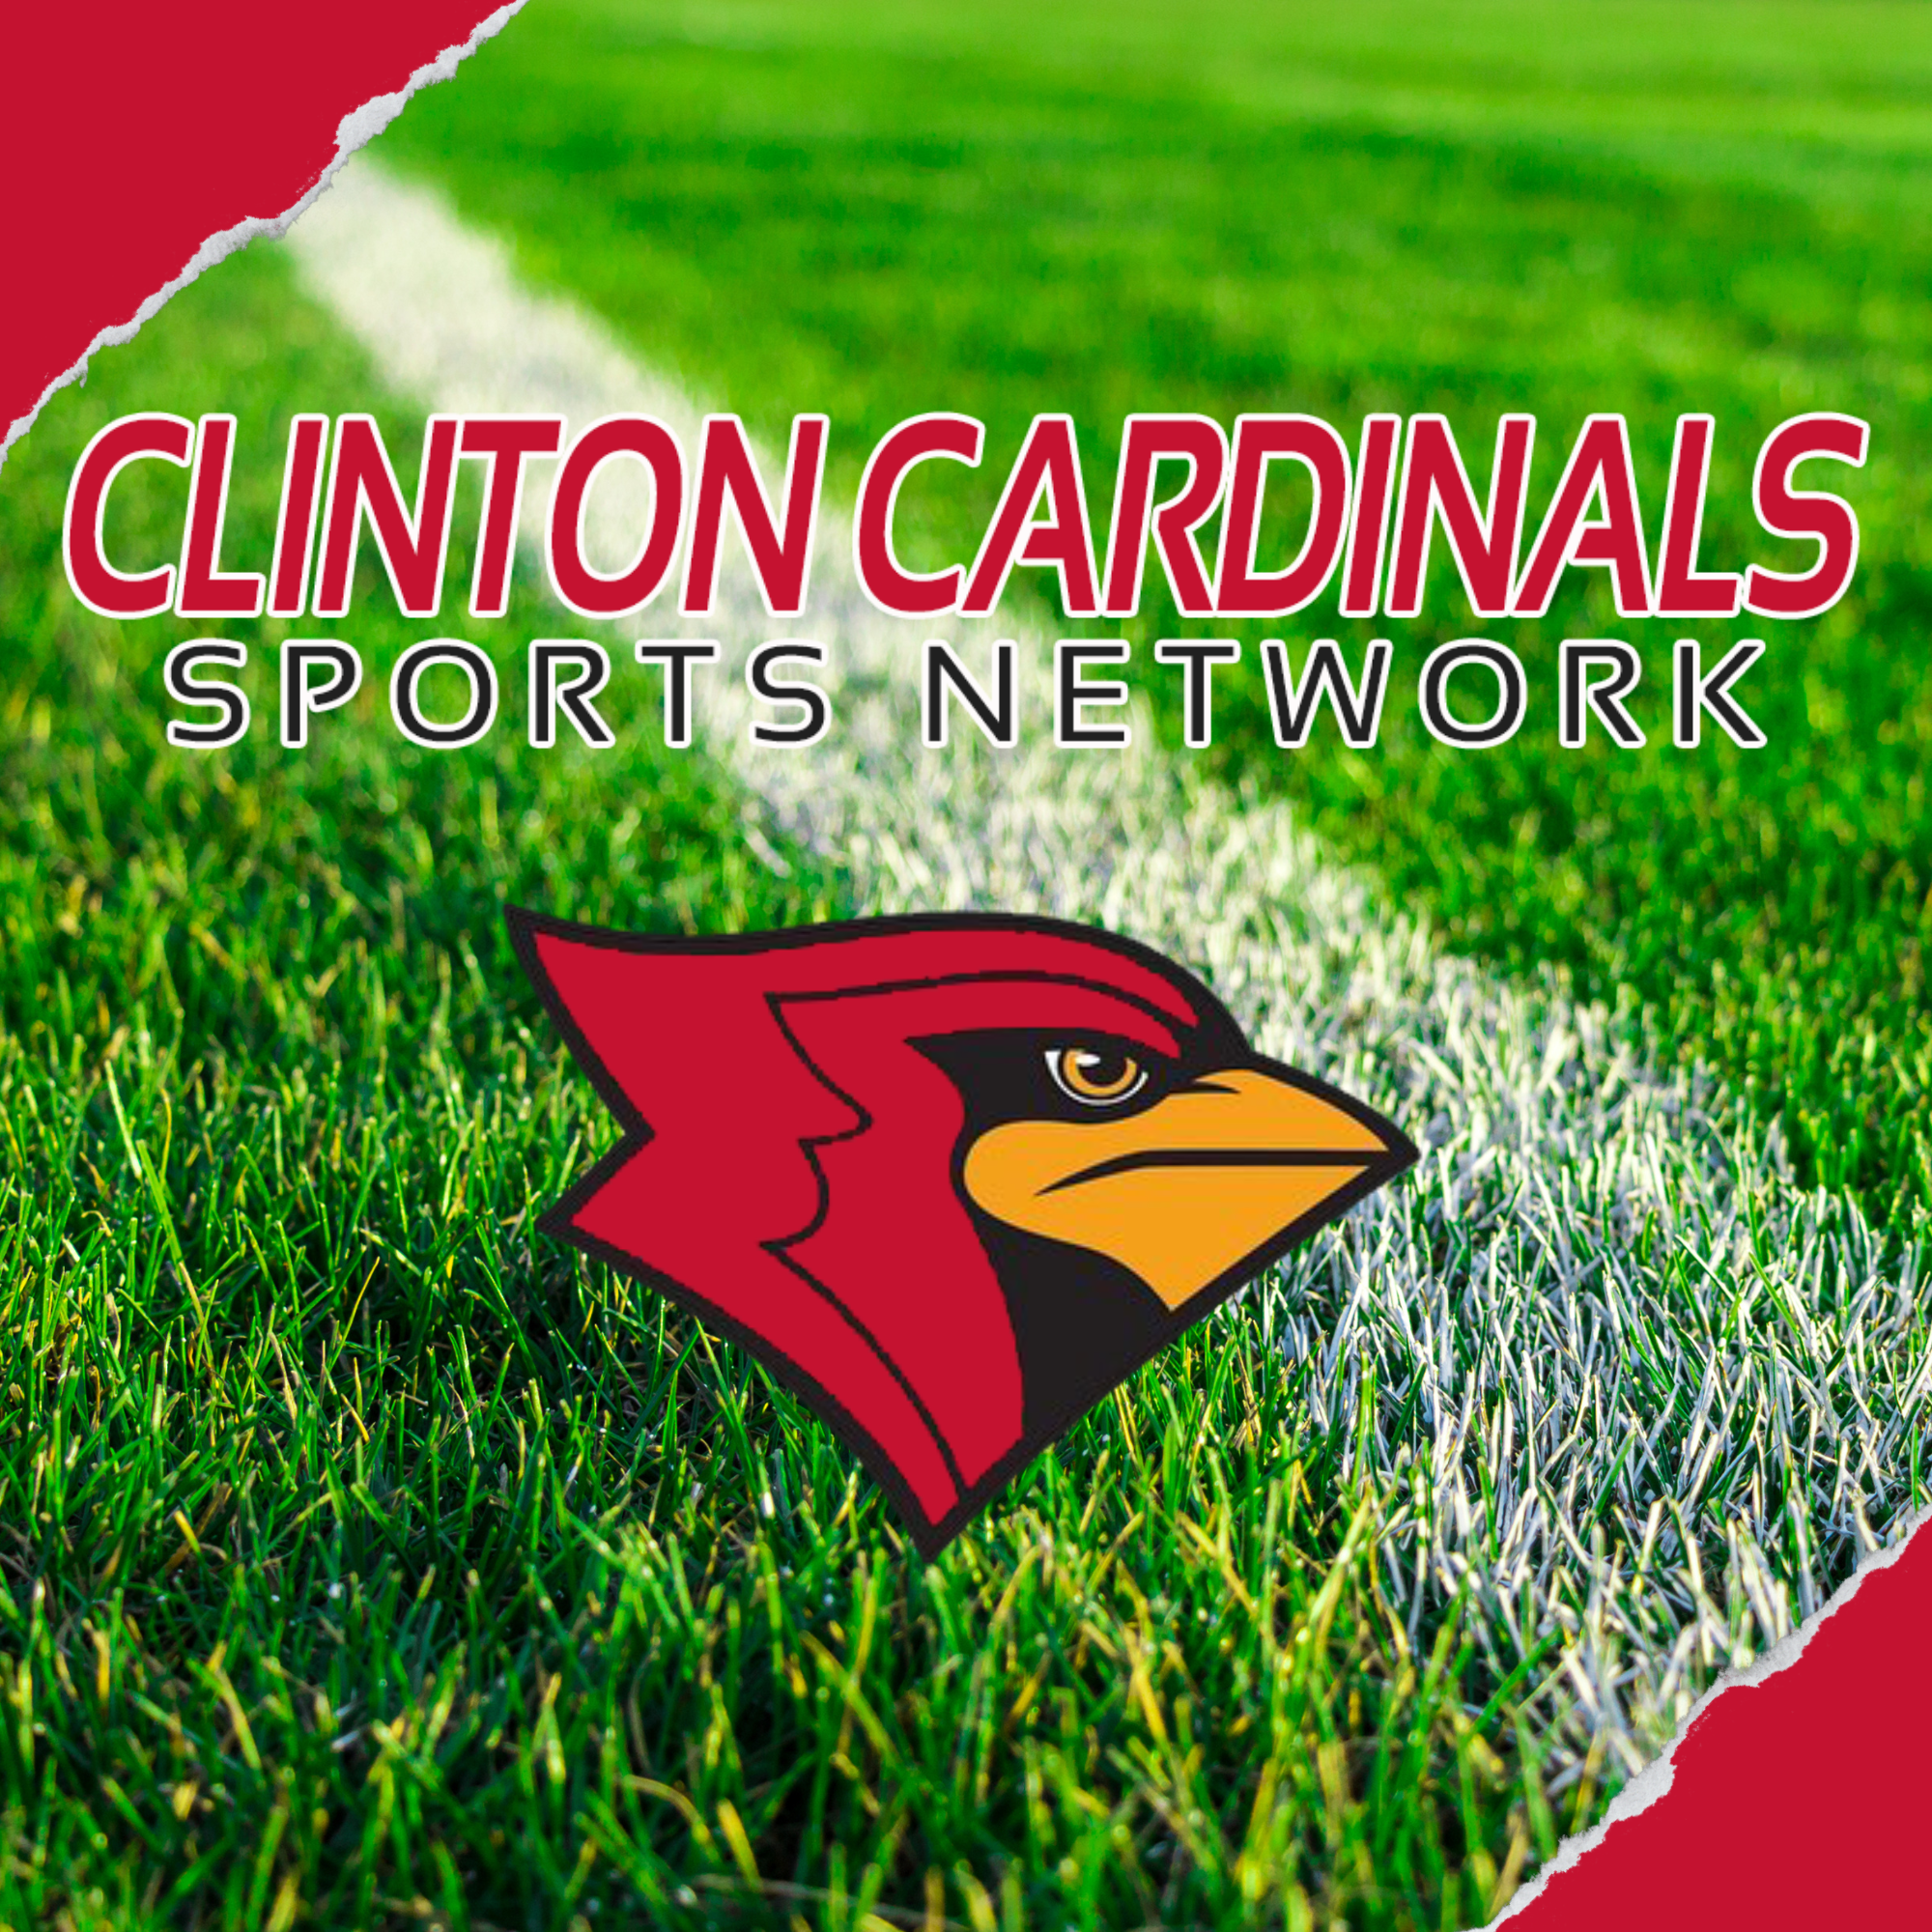 Clinton Cardinals Sports Network